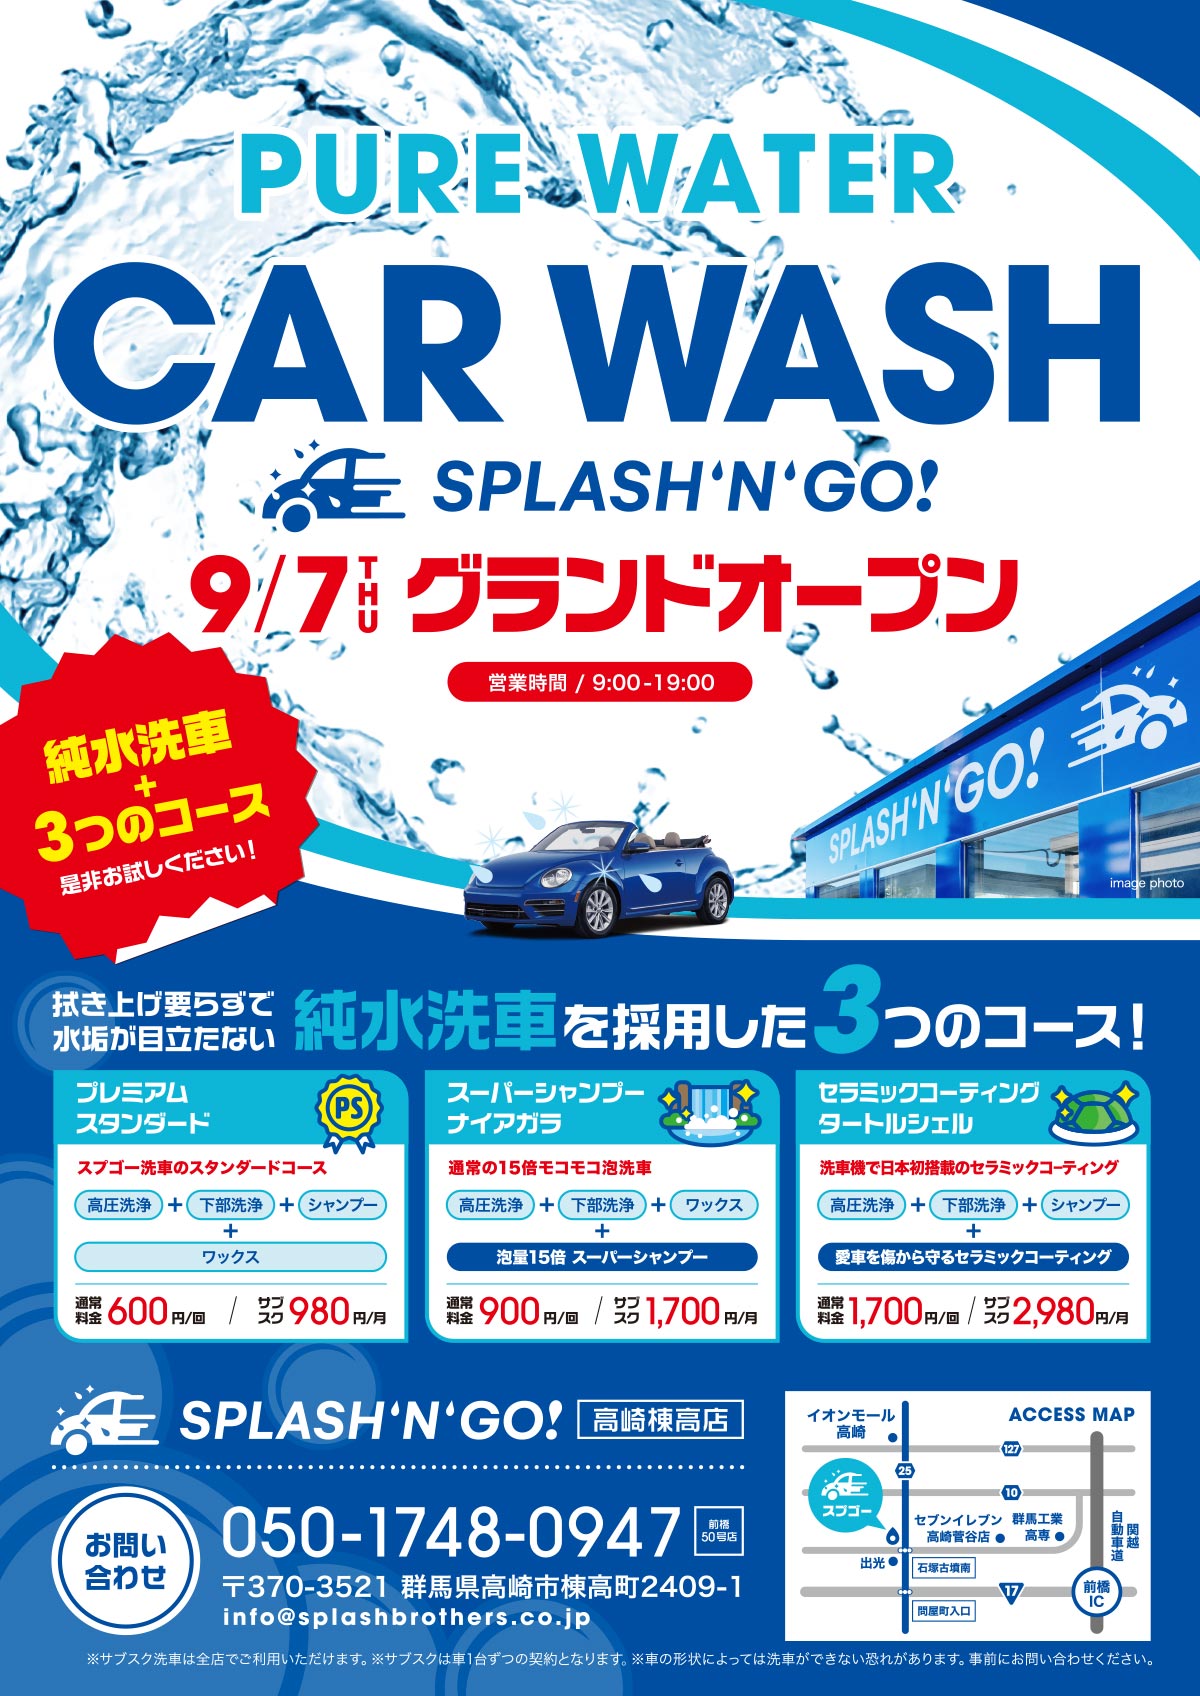 PURE WATER CAR WASH SPLASH'N'GO! 9月7日 グランドオープン